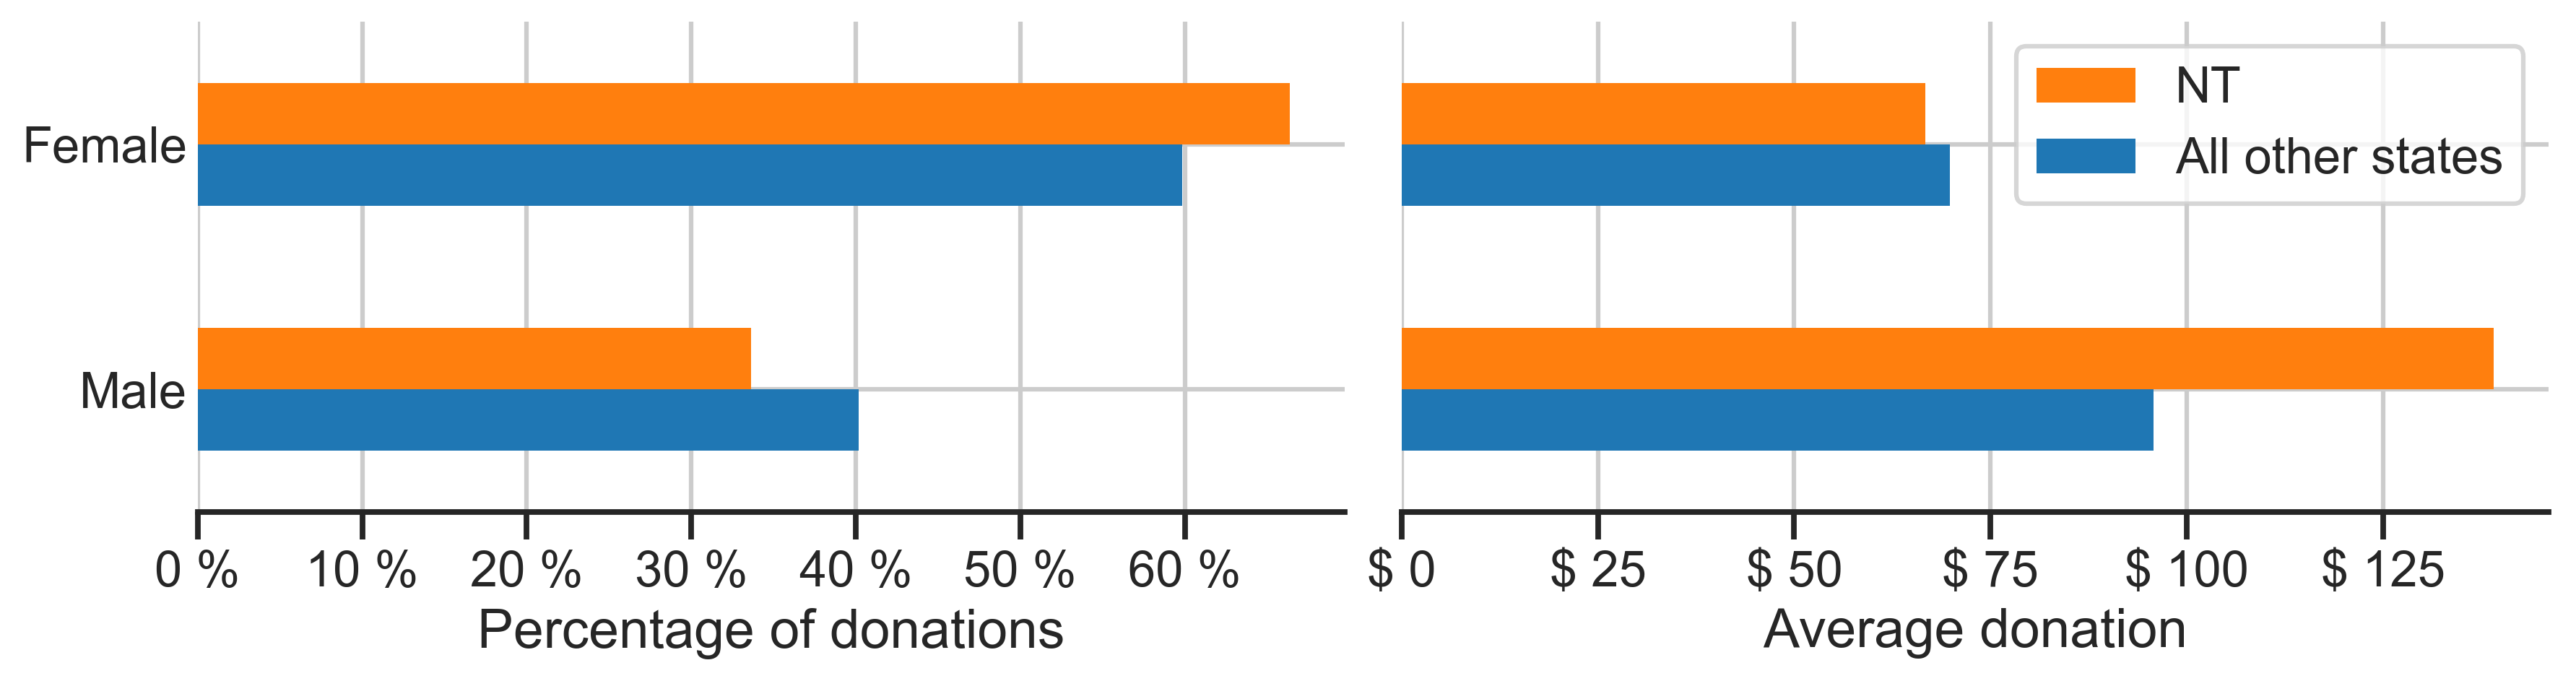 Figure 5 - NT average donation ranking - gender comparison